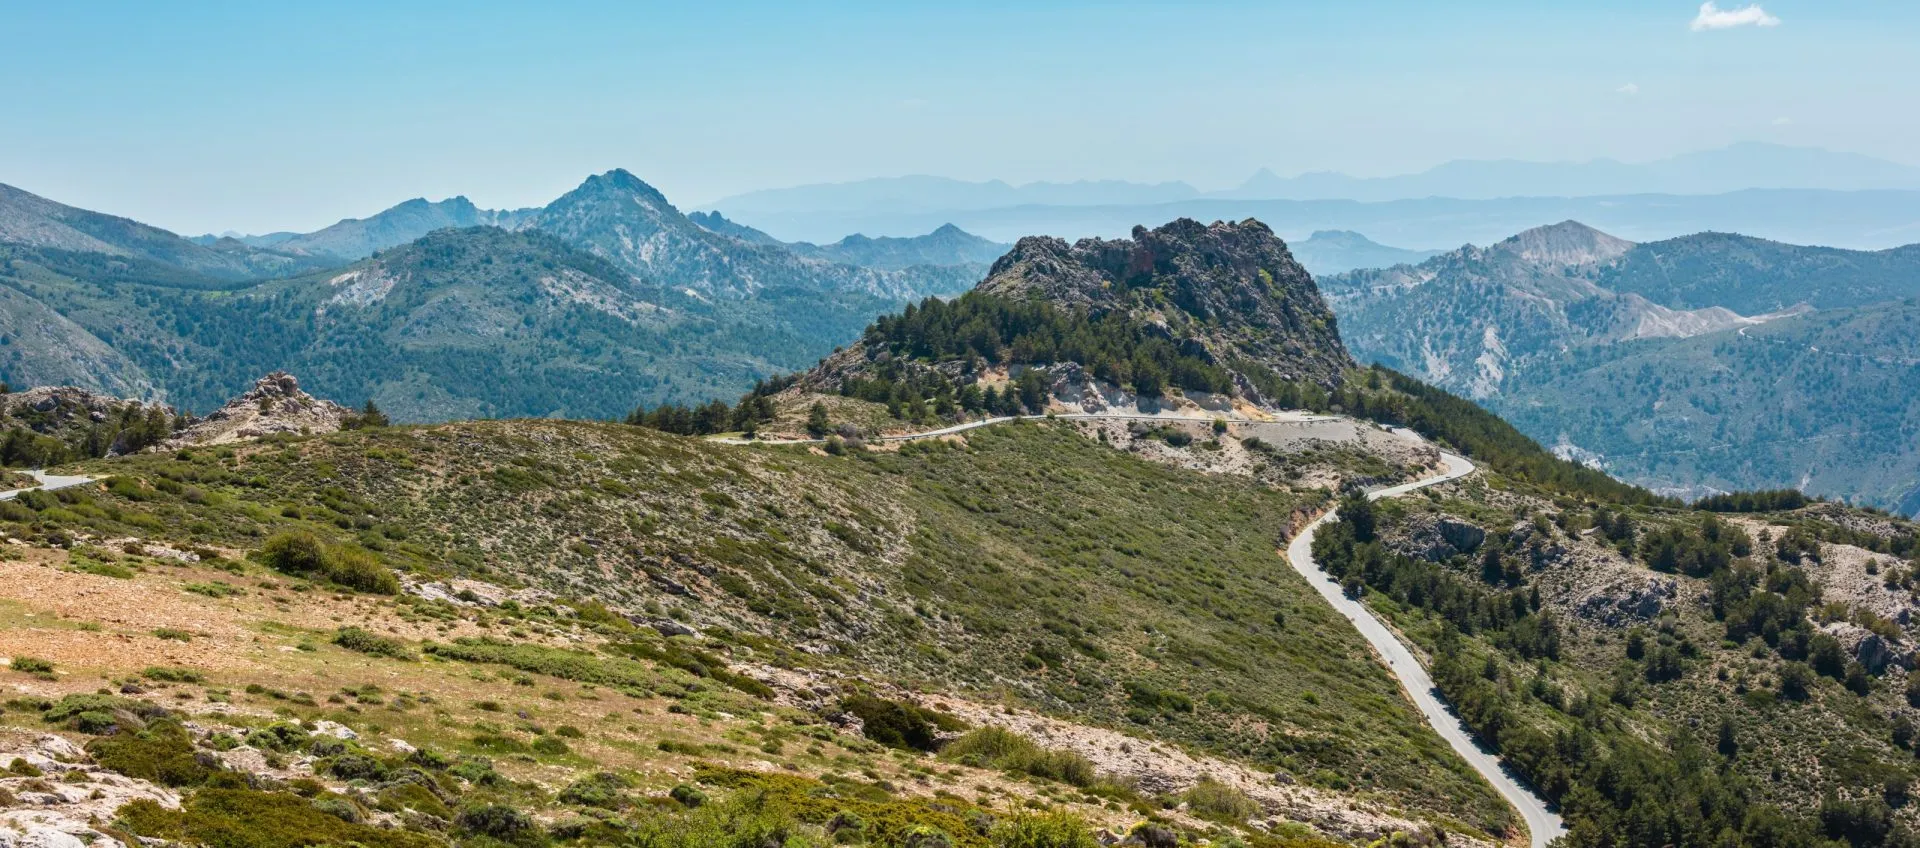 Sierra Nevada nationalpark, Spanien.